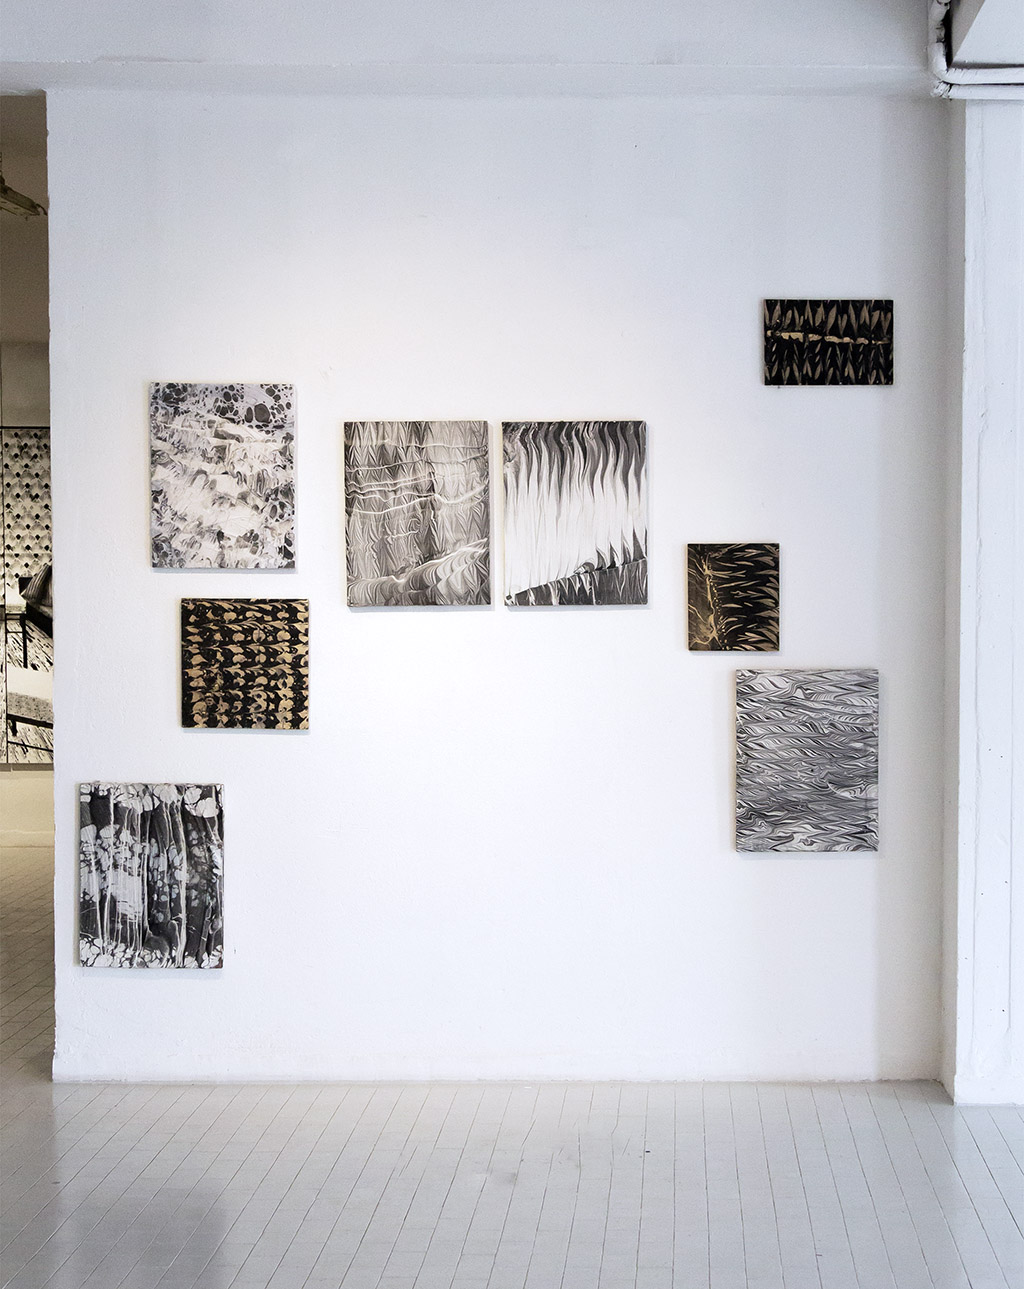 Inez De Brauw, Installazione mostra "Covert Motion", 2018